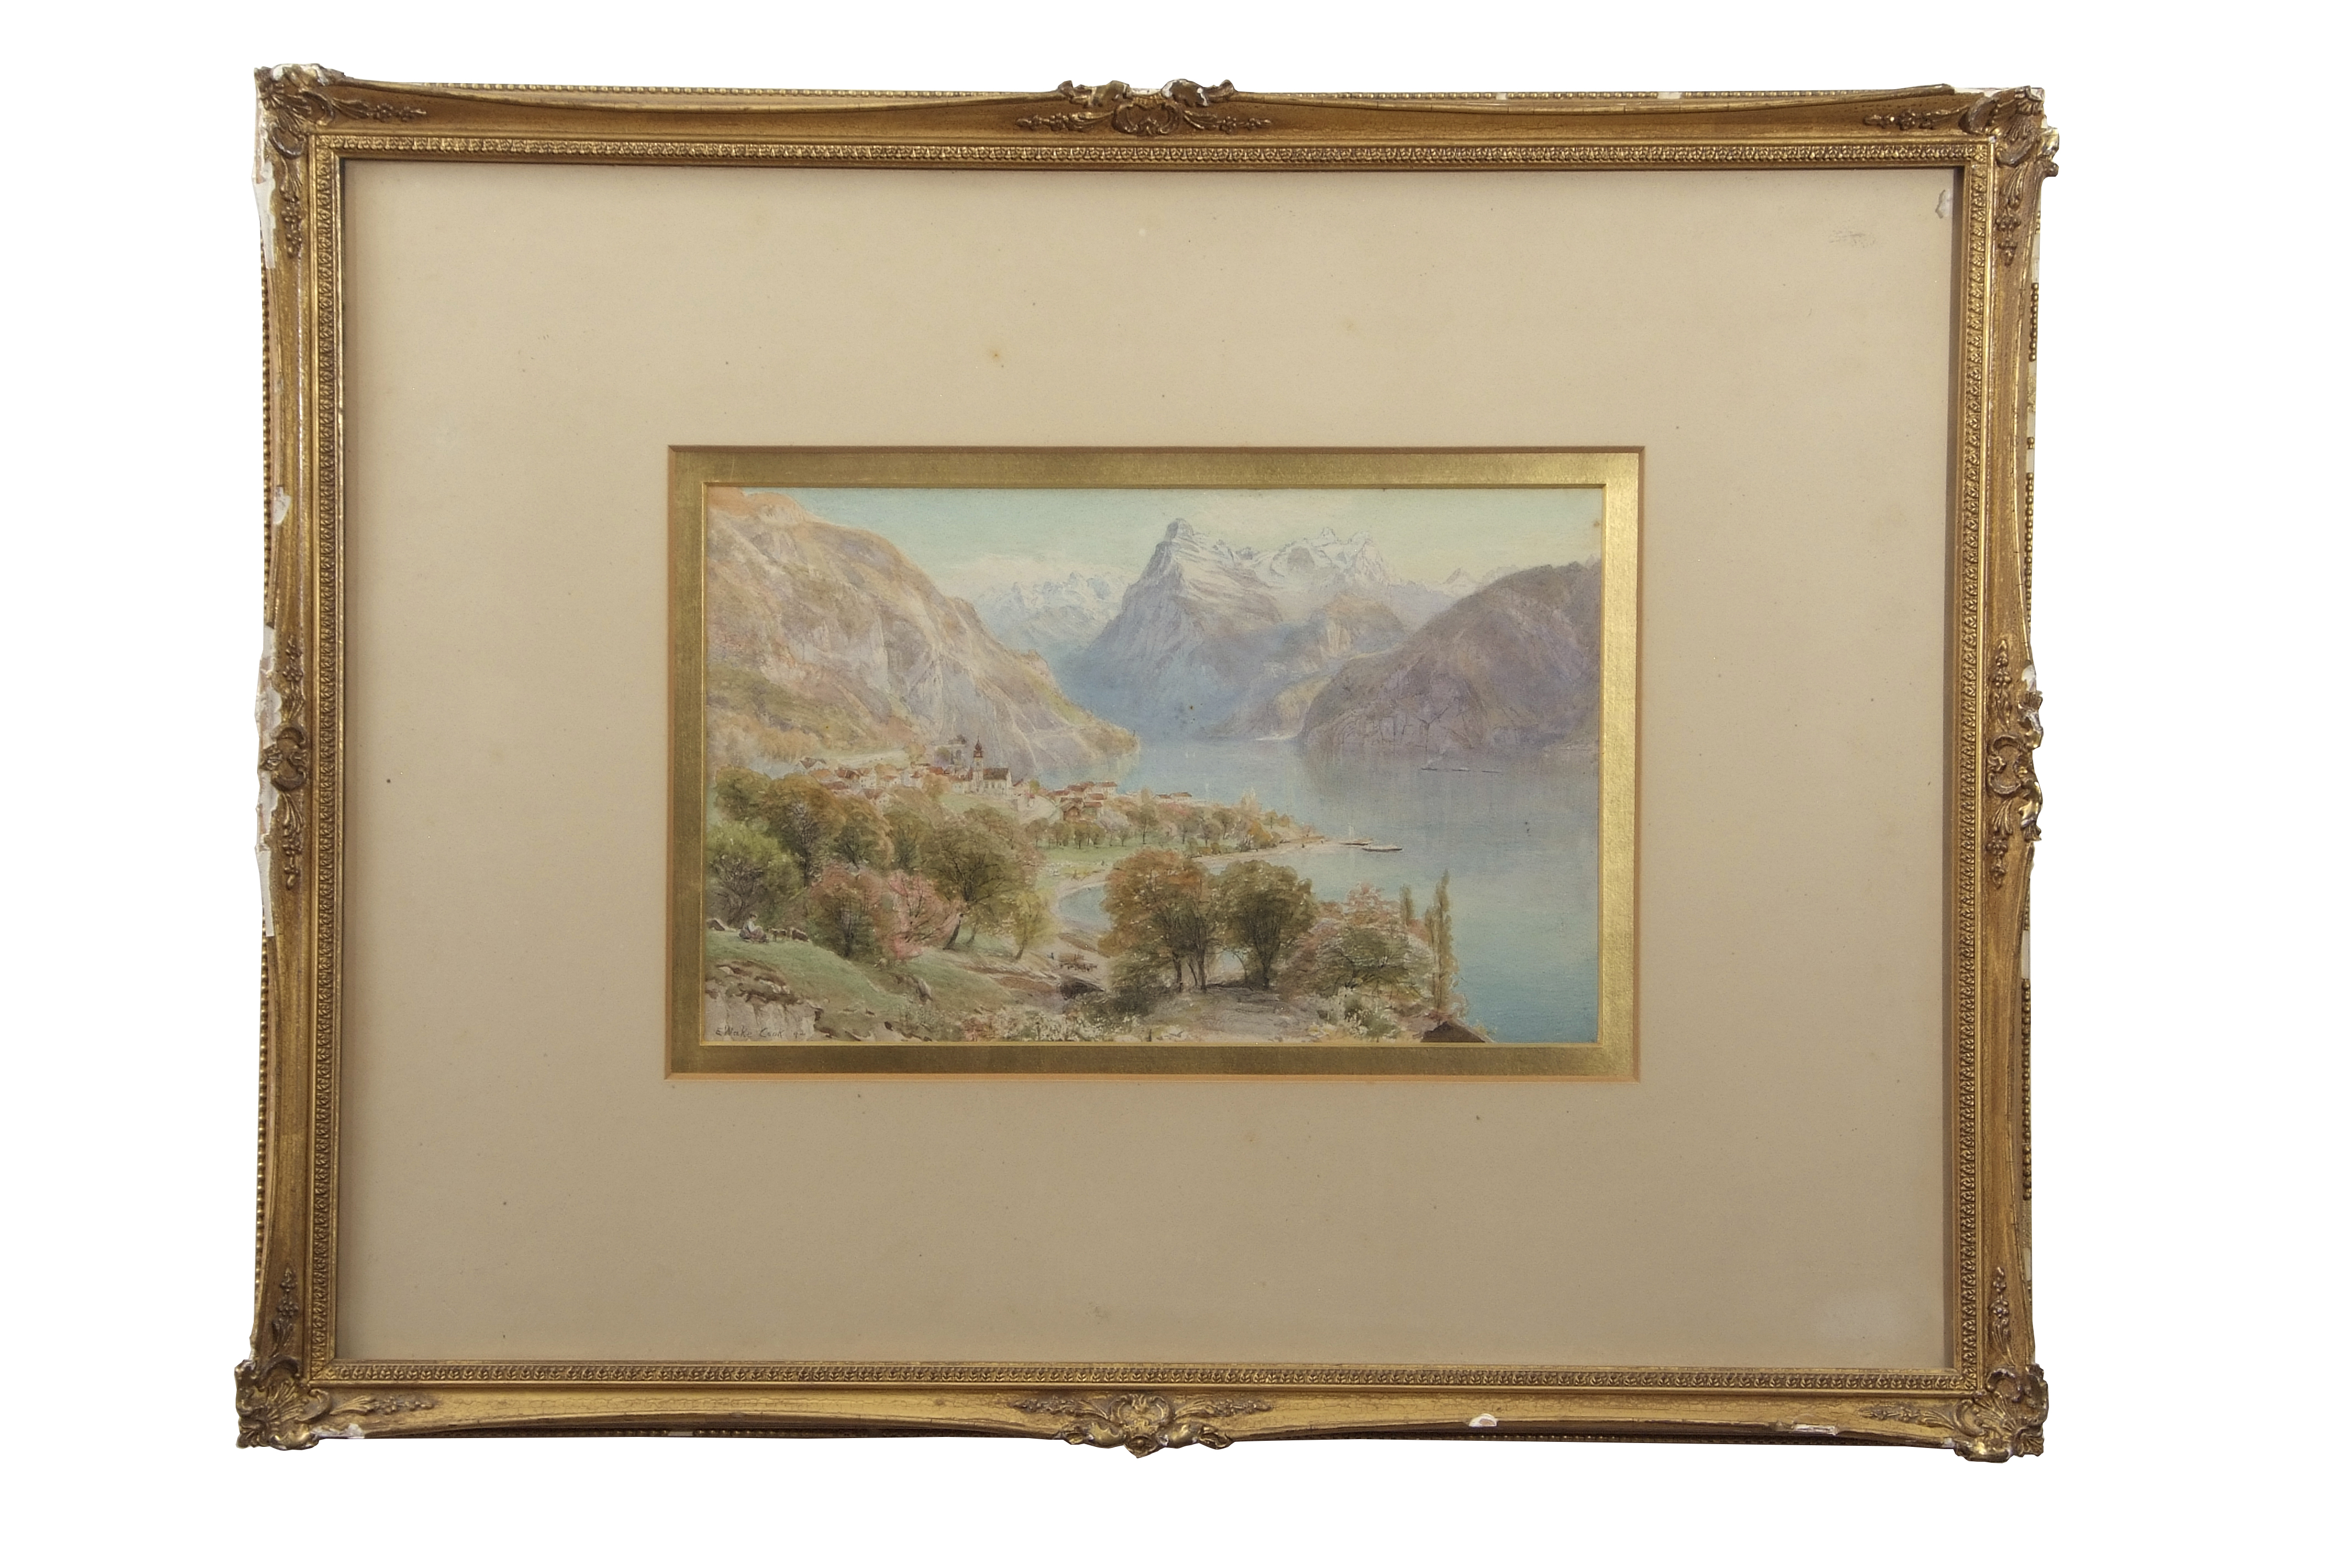 Ebenezer Wake Cook (1843-1926), "Uri Rothstock, Lake Lucerne", watercolour, signed and dated 92